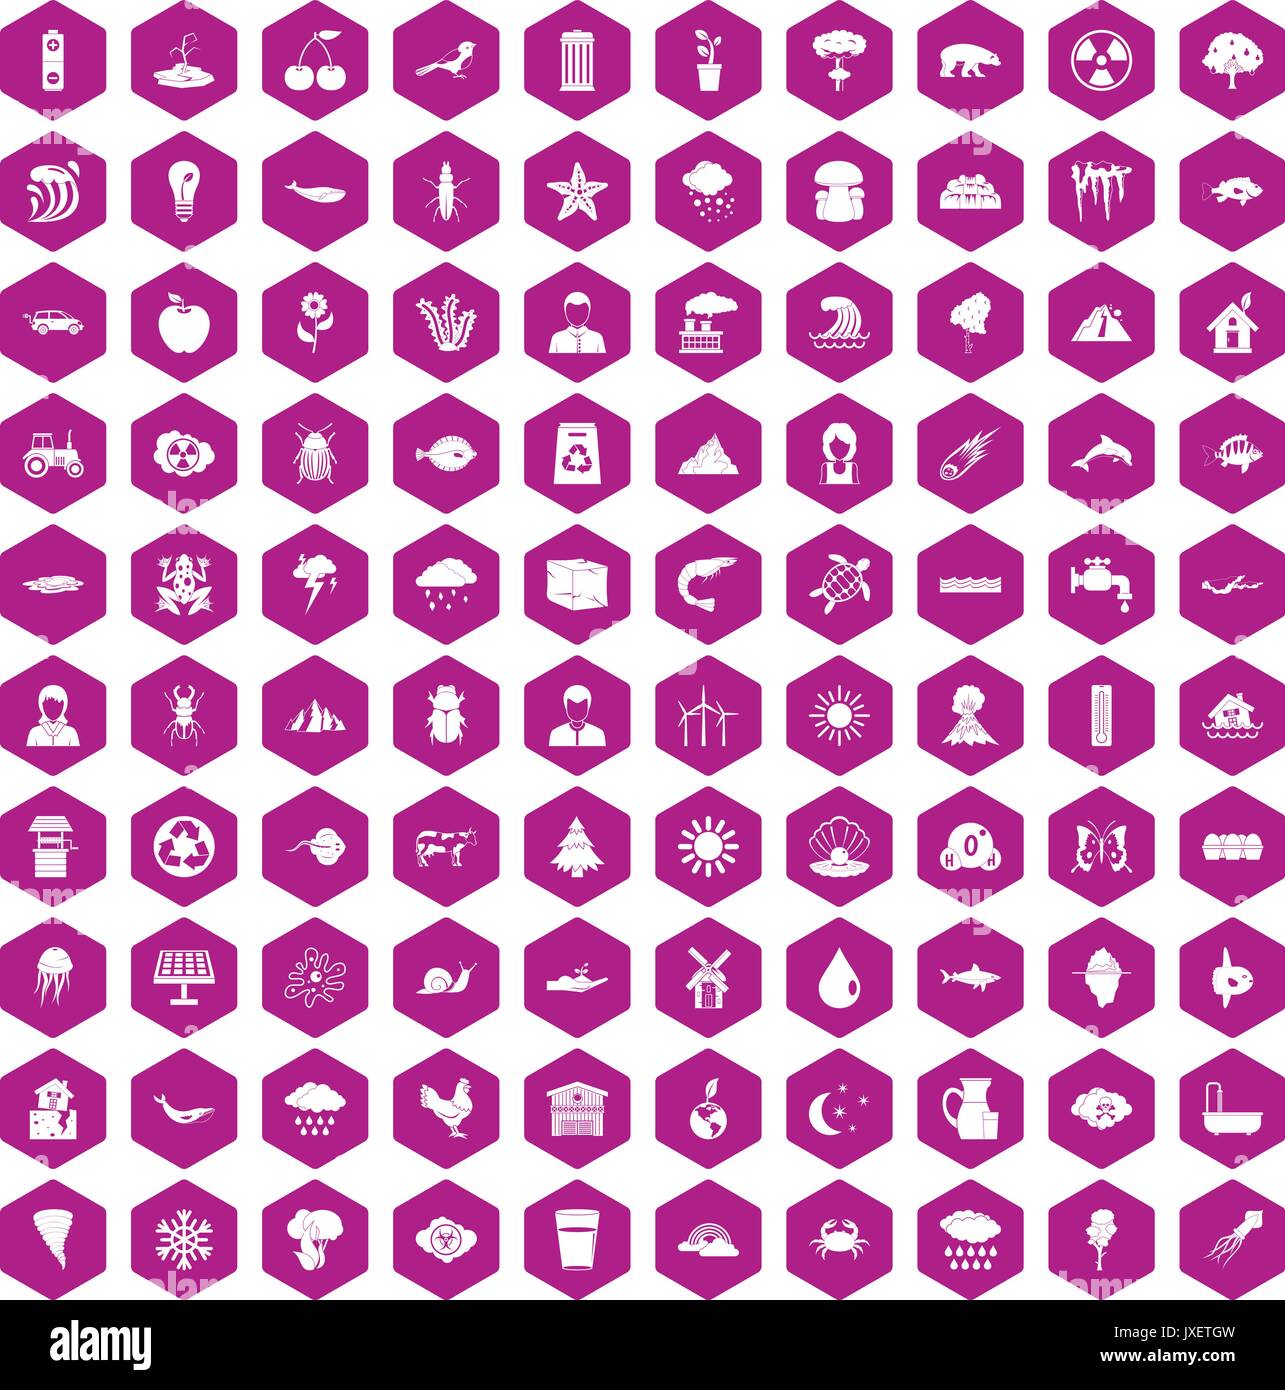 100 earth icons hexagon violet Stock Vector